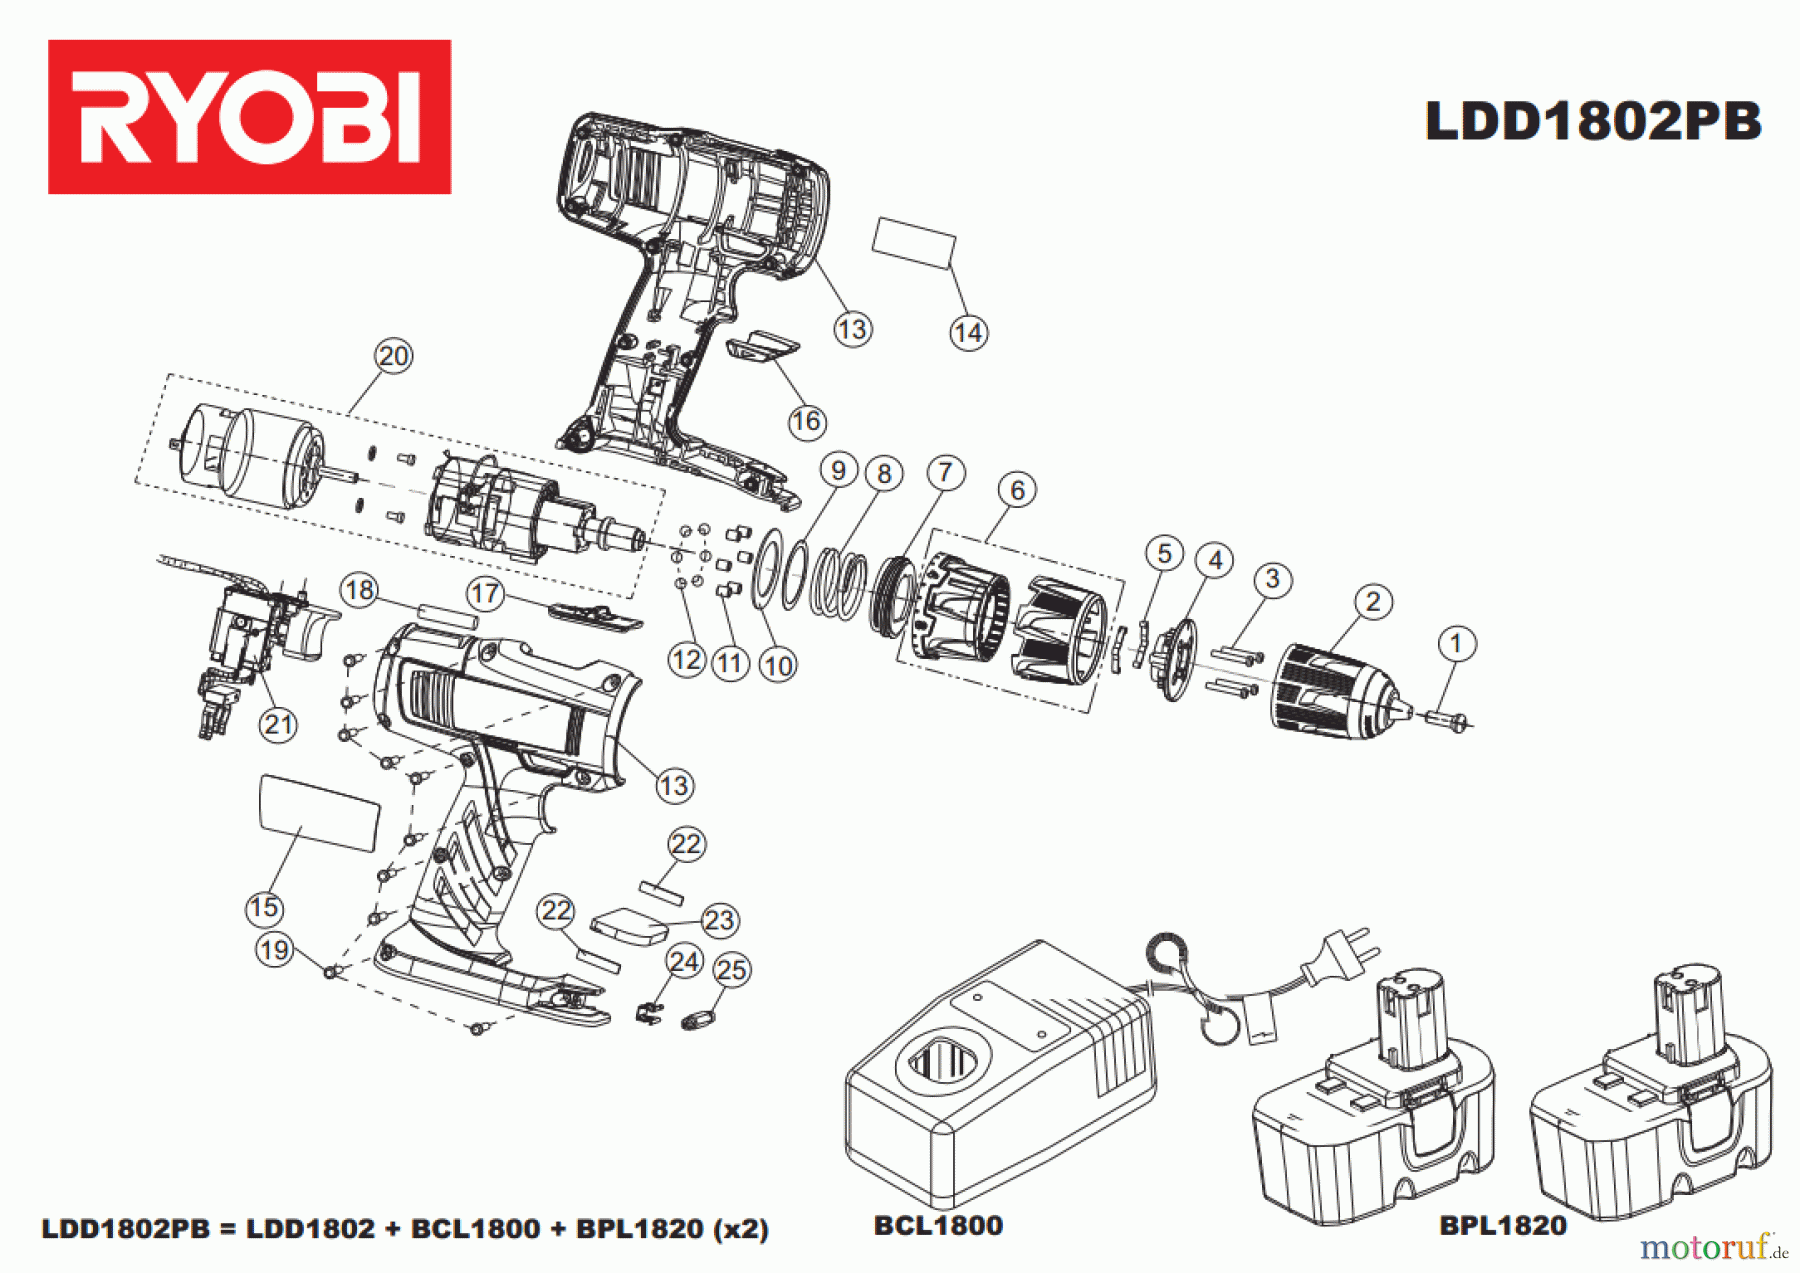  Ryobi (Schlag-)Bohrschrauber Bohrschrauber LDD1802PB Seite 1